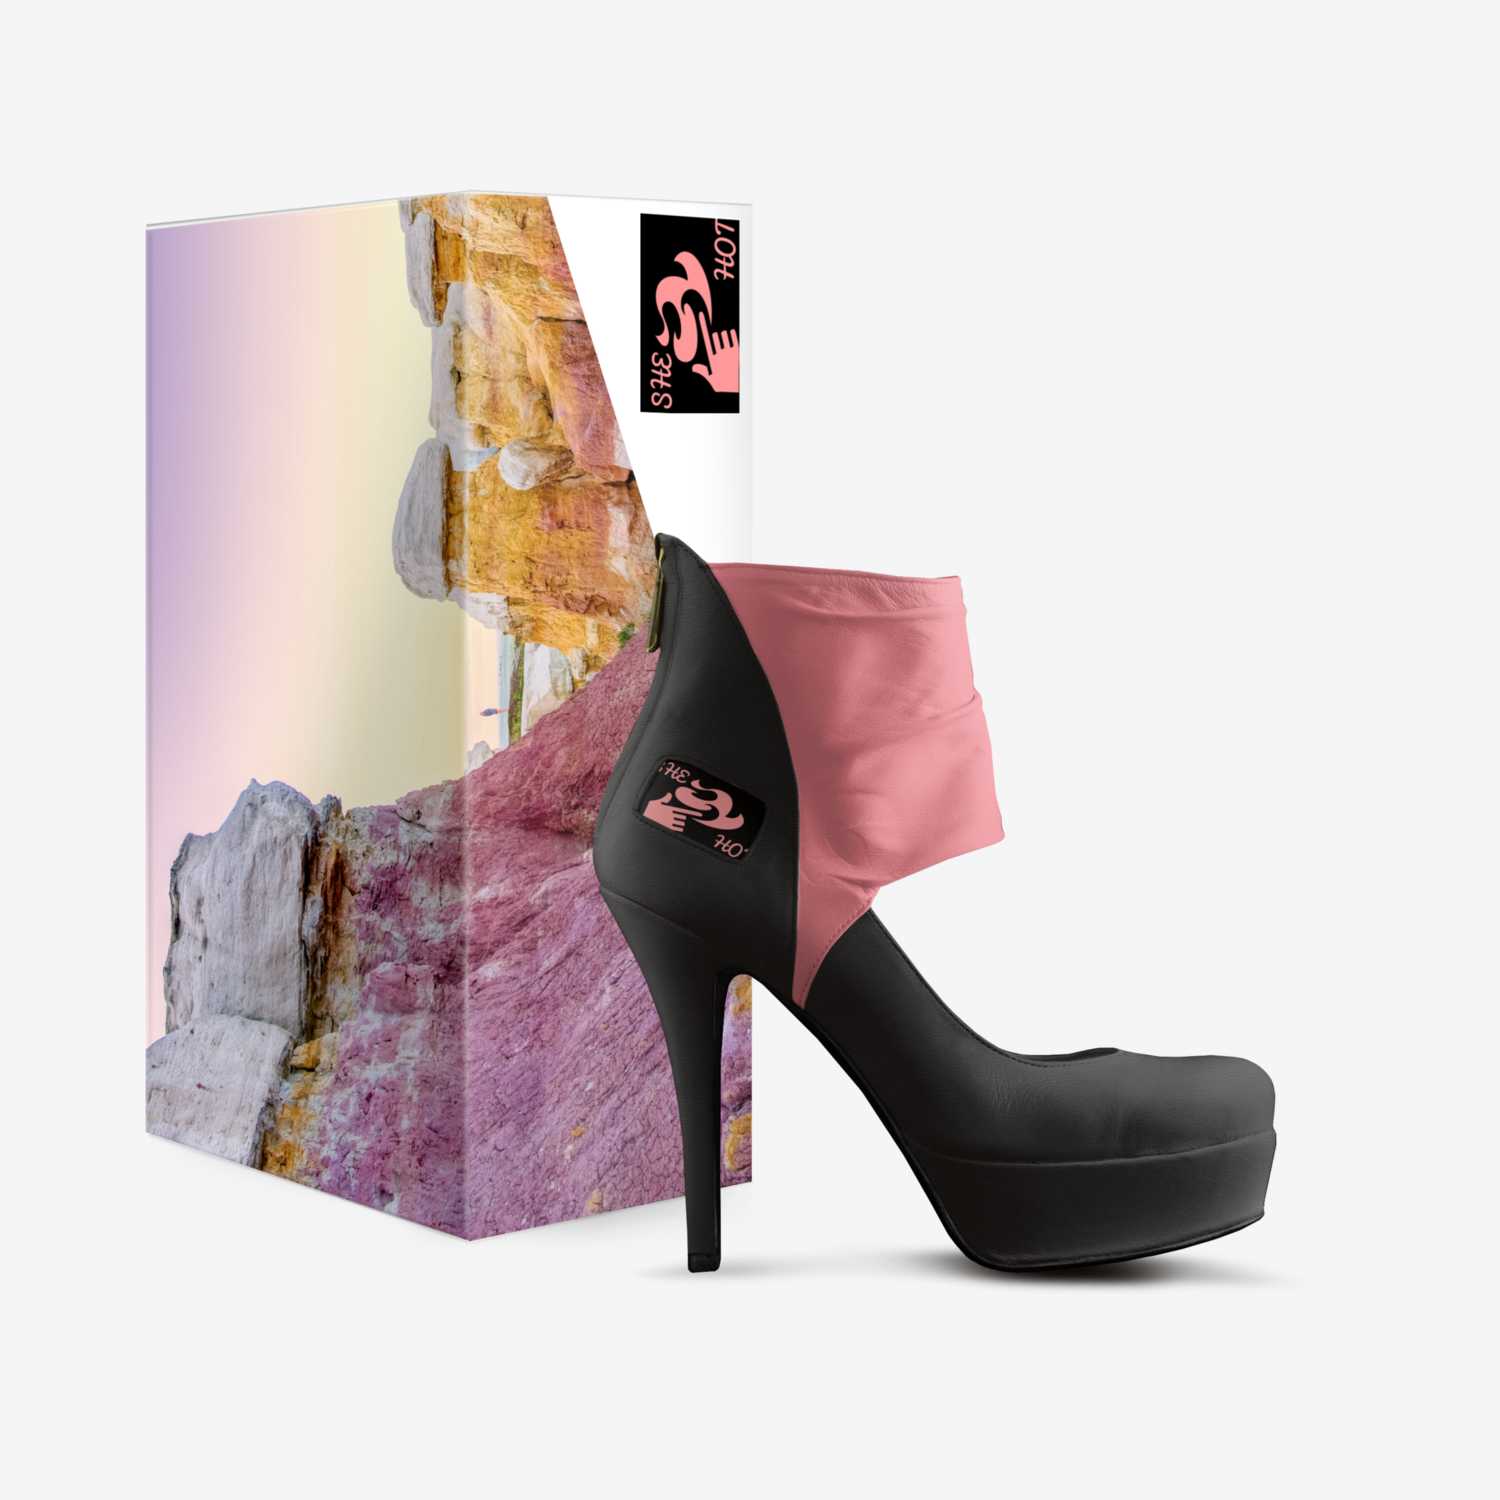 SHE-HOT custom made in Italy shoes by Mandi Kamyli Itani | Box view